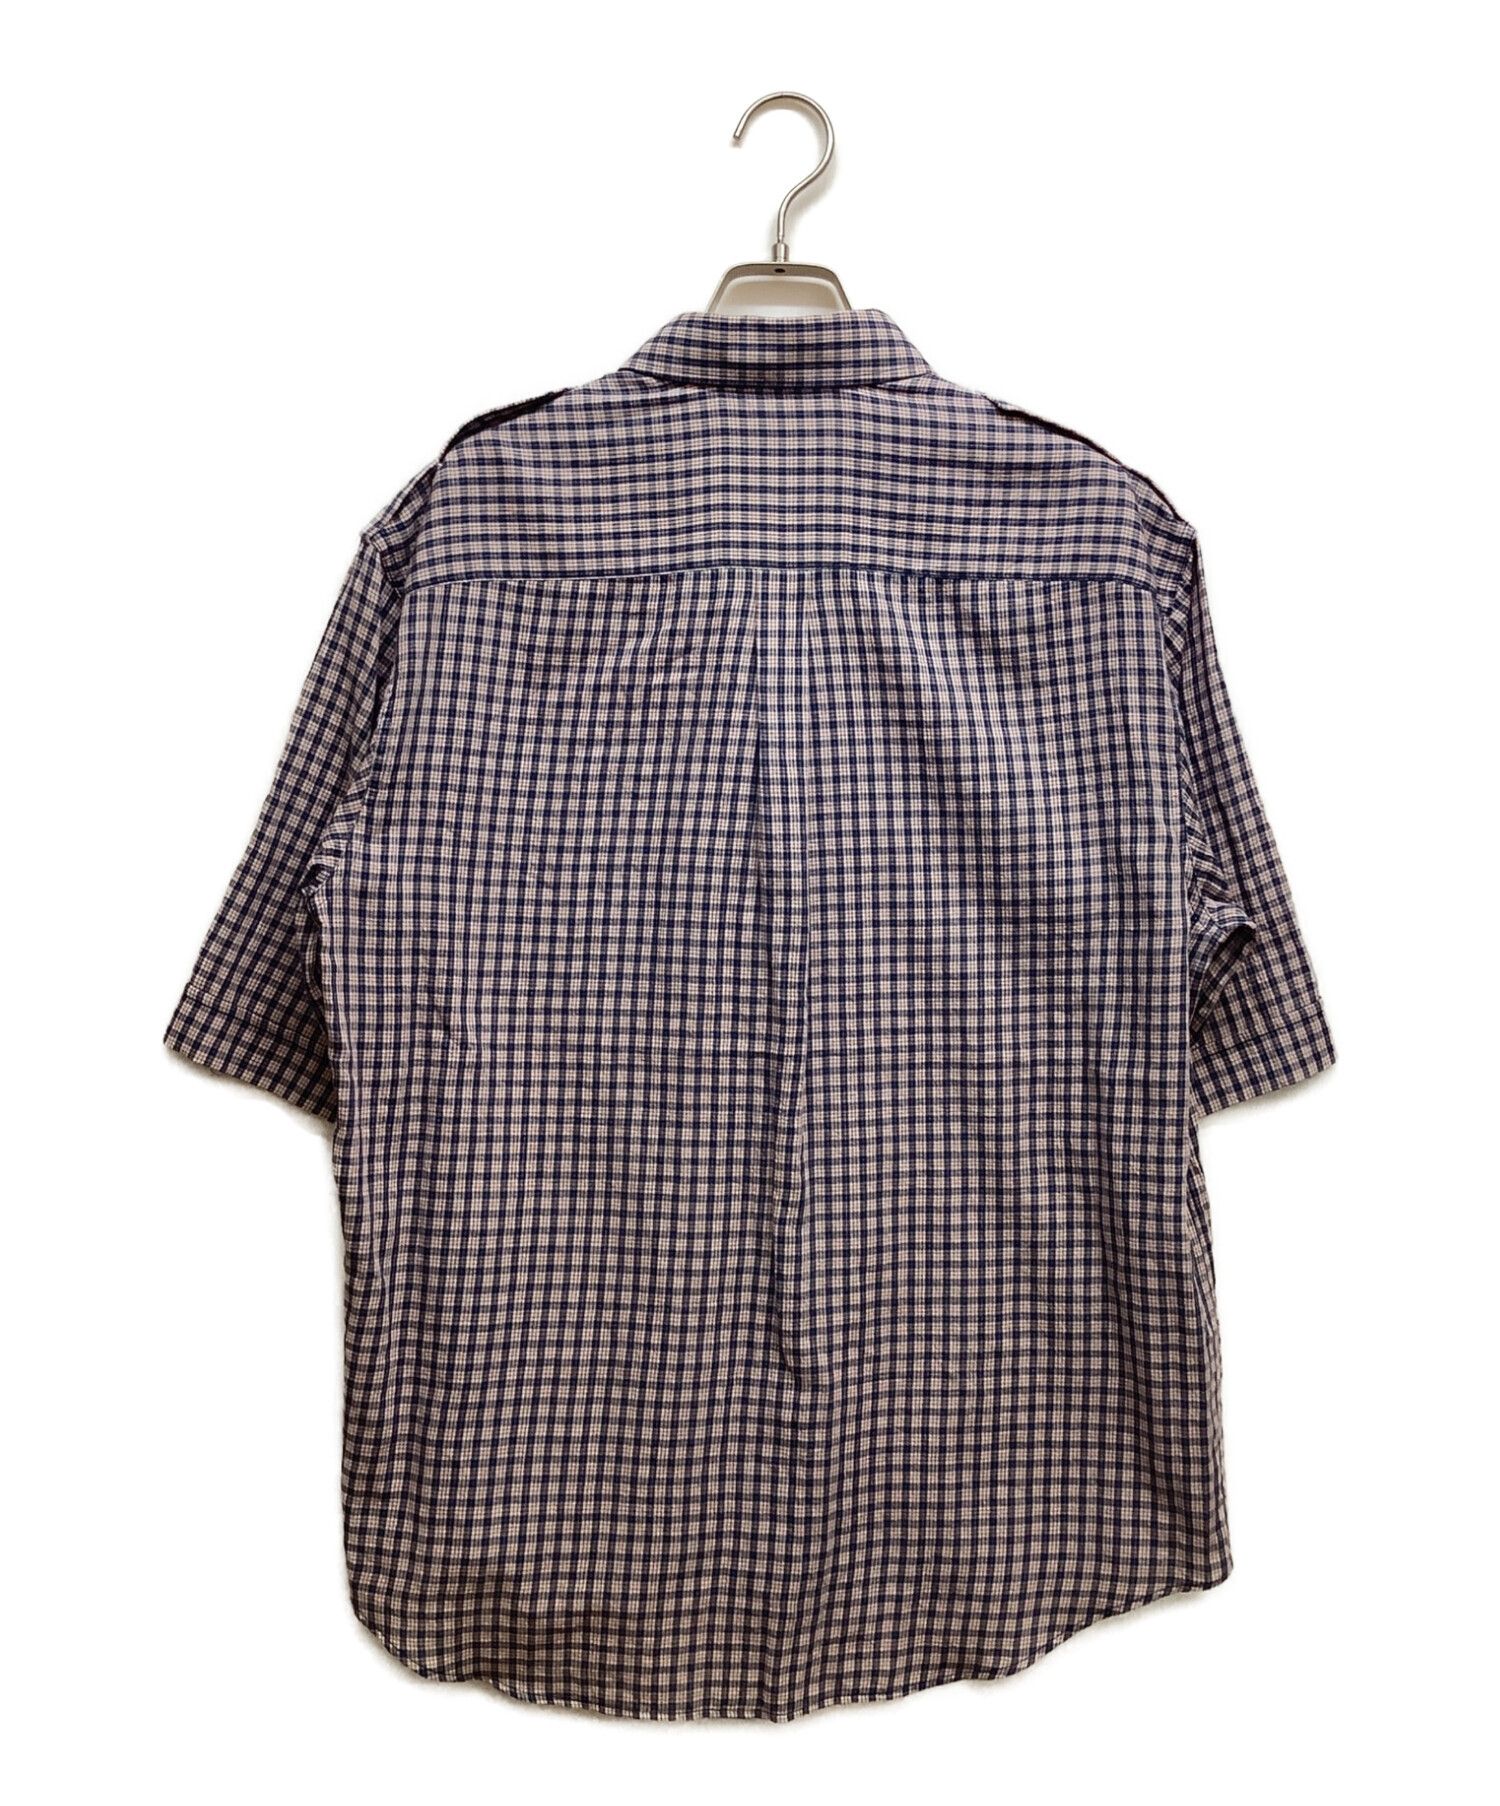 GUCCI (グッチ) 半袖チェックシャツ ネイビー×レッド サイズ:46 未使用品